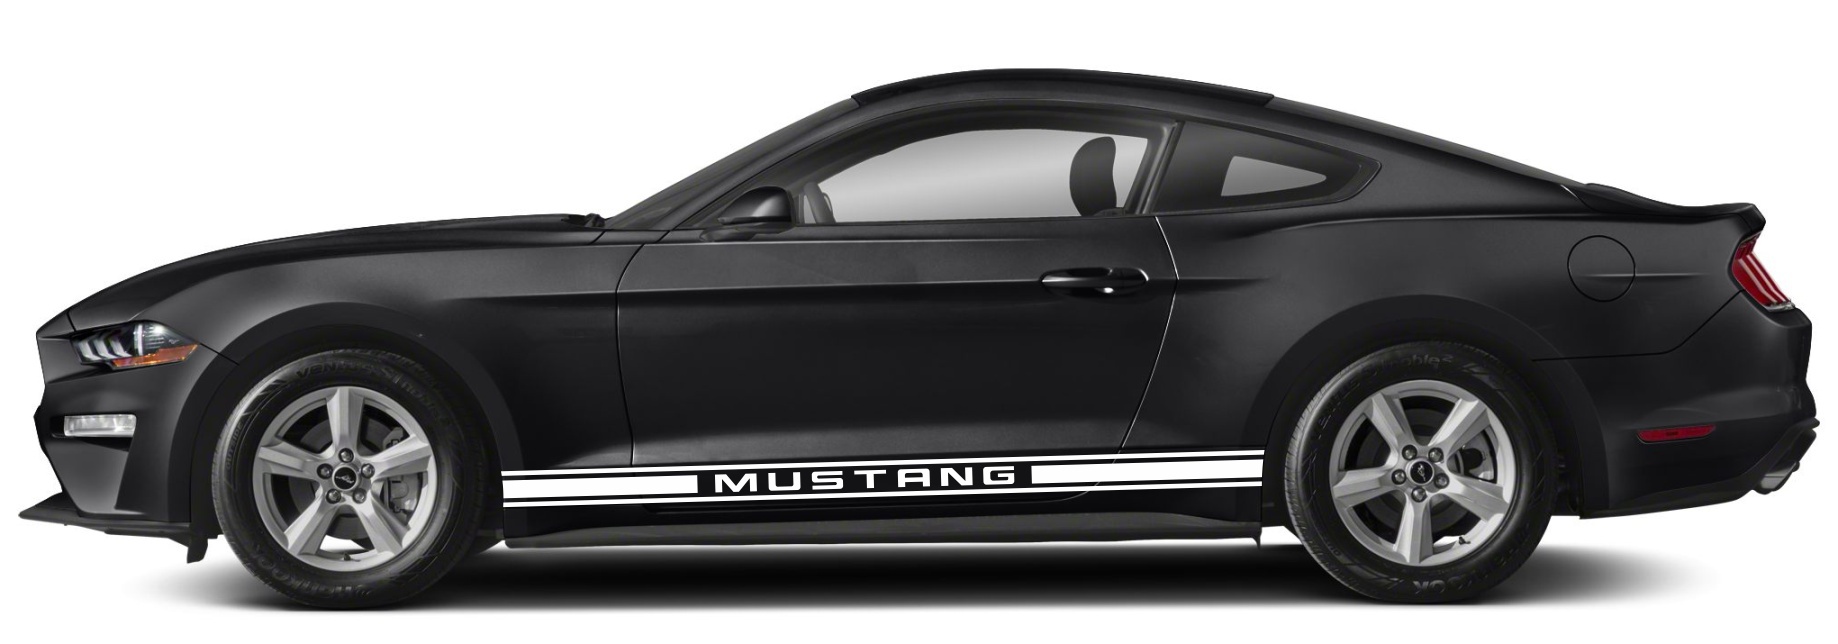 Naklejki na samochód Ford Mustang GT STICKER DECALS STRIPES